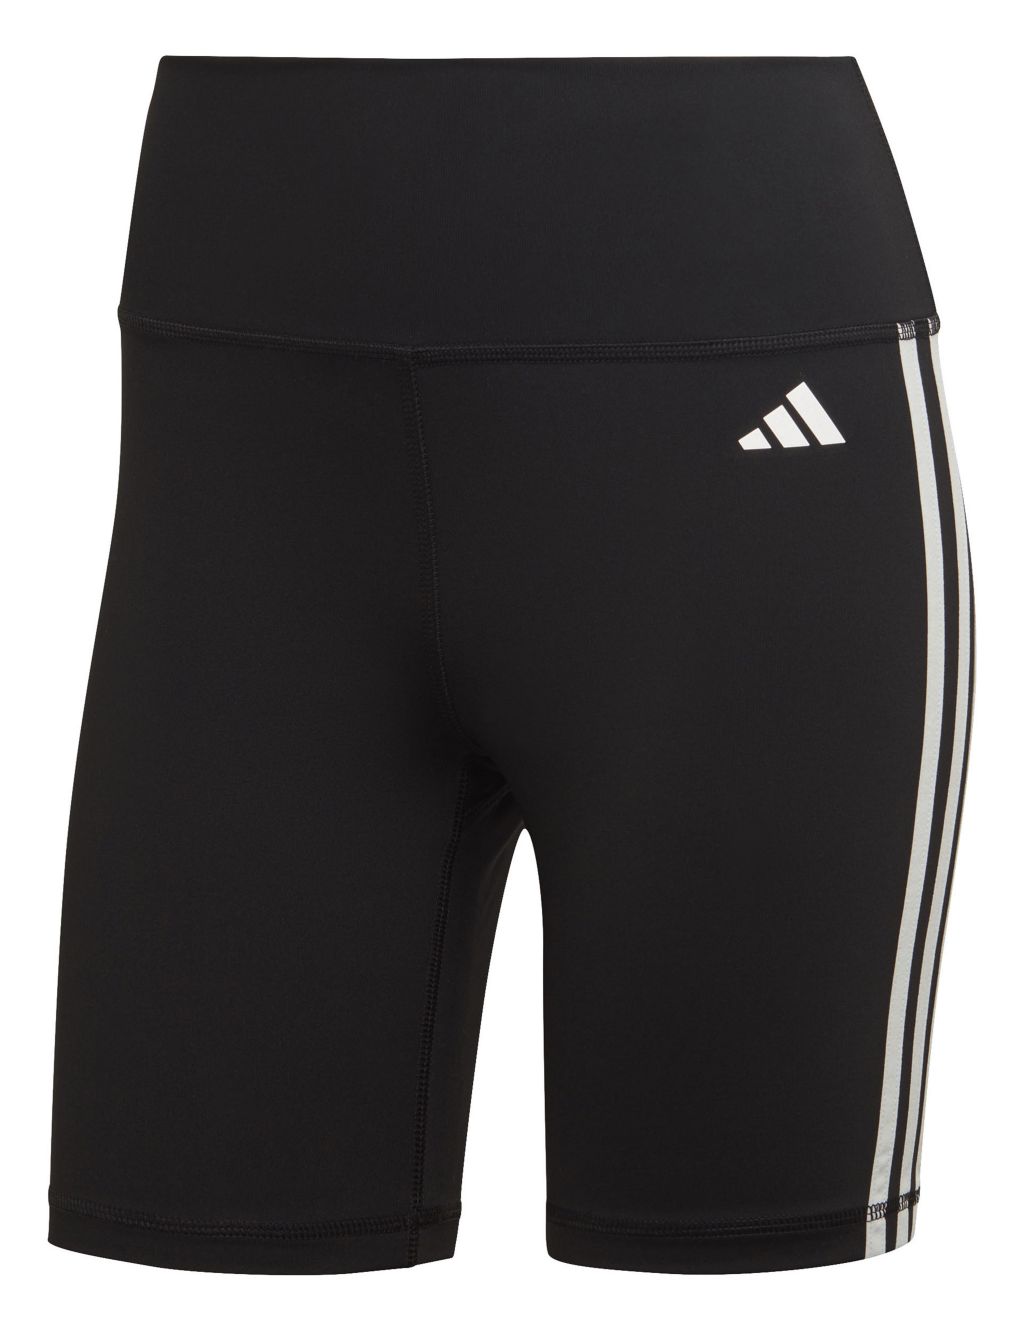 Train Essentials High Waisted Gym Shorts | Adidas | M&S